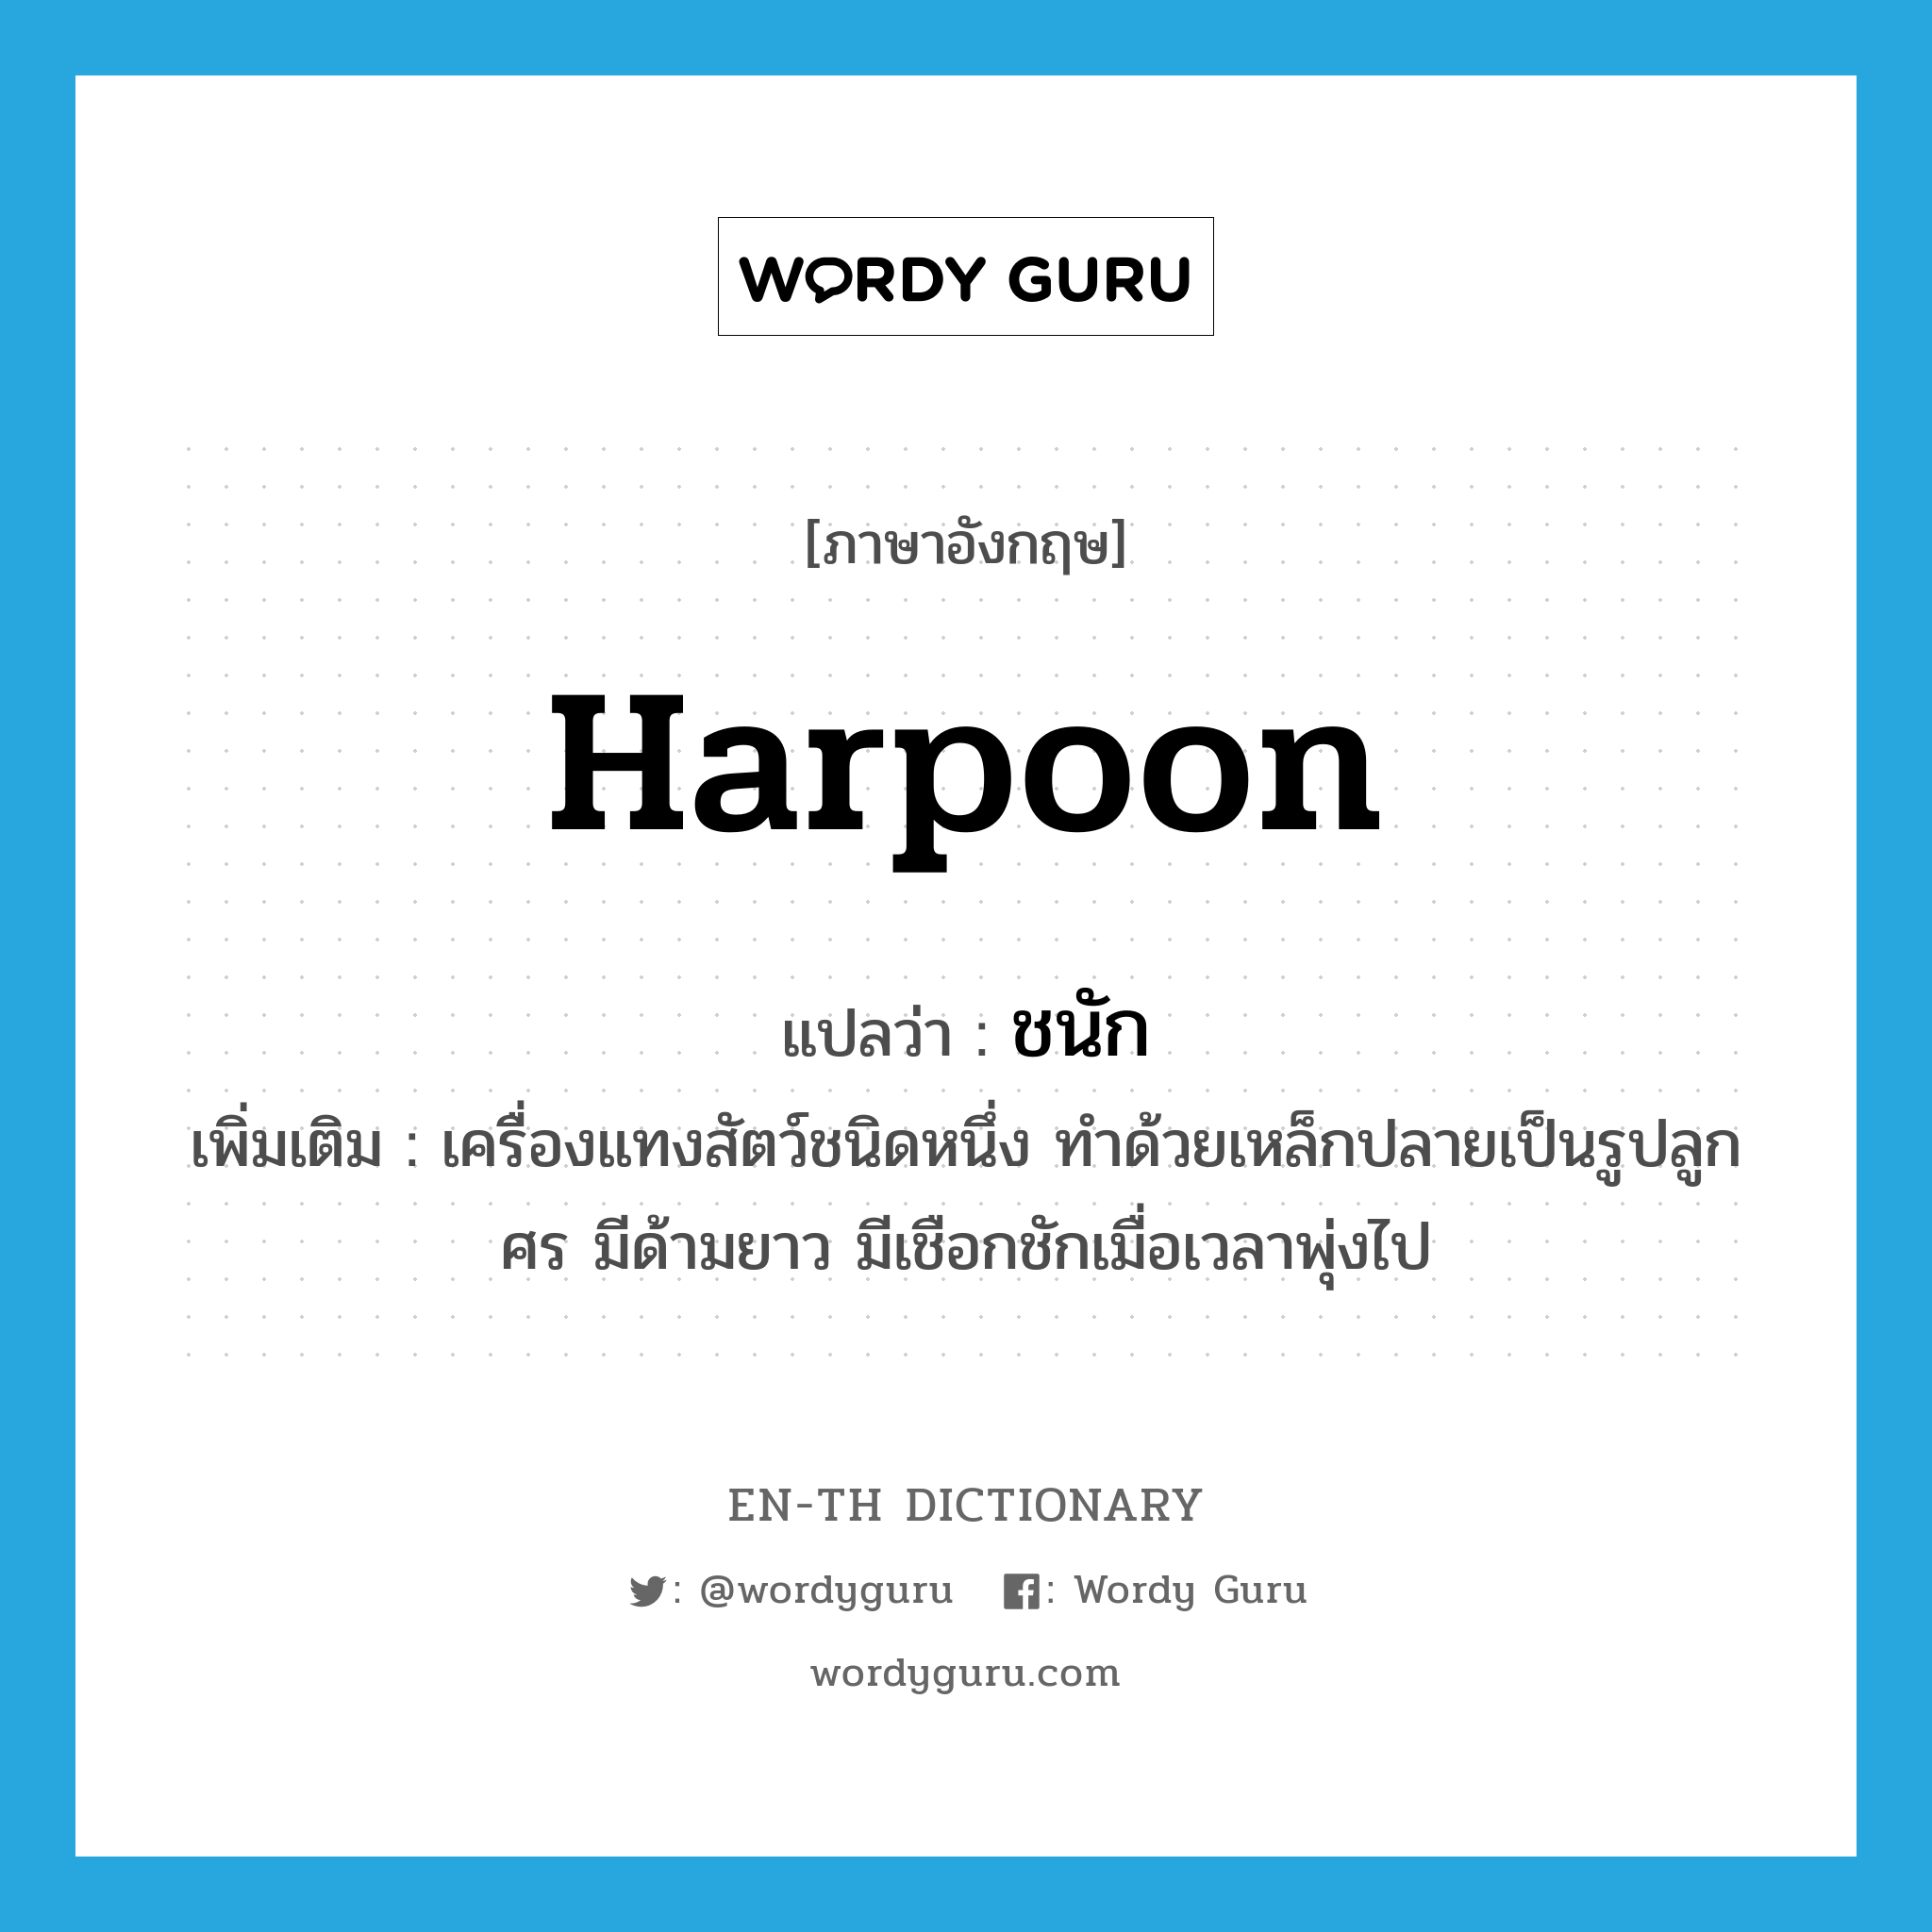 harpoon แปลว่า?, คำศัพท์ภาษาอังกฤษ harpoon แปลว่า ชนัก ประเภท N เพิ่มเติม เครื่องแทงสัตว์ชนิดหนึ่ง ทำด้วยเหล็กปลายเป็นรูปลูกศร มีด้ามยาว มีเชือกชักเมื่อเวลาพุ่งไป หมวด N